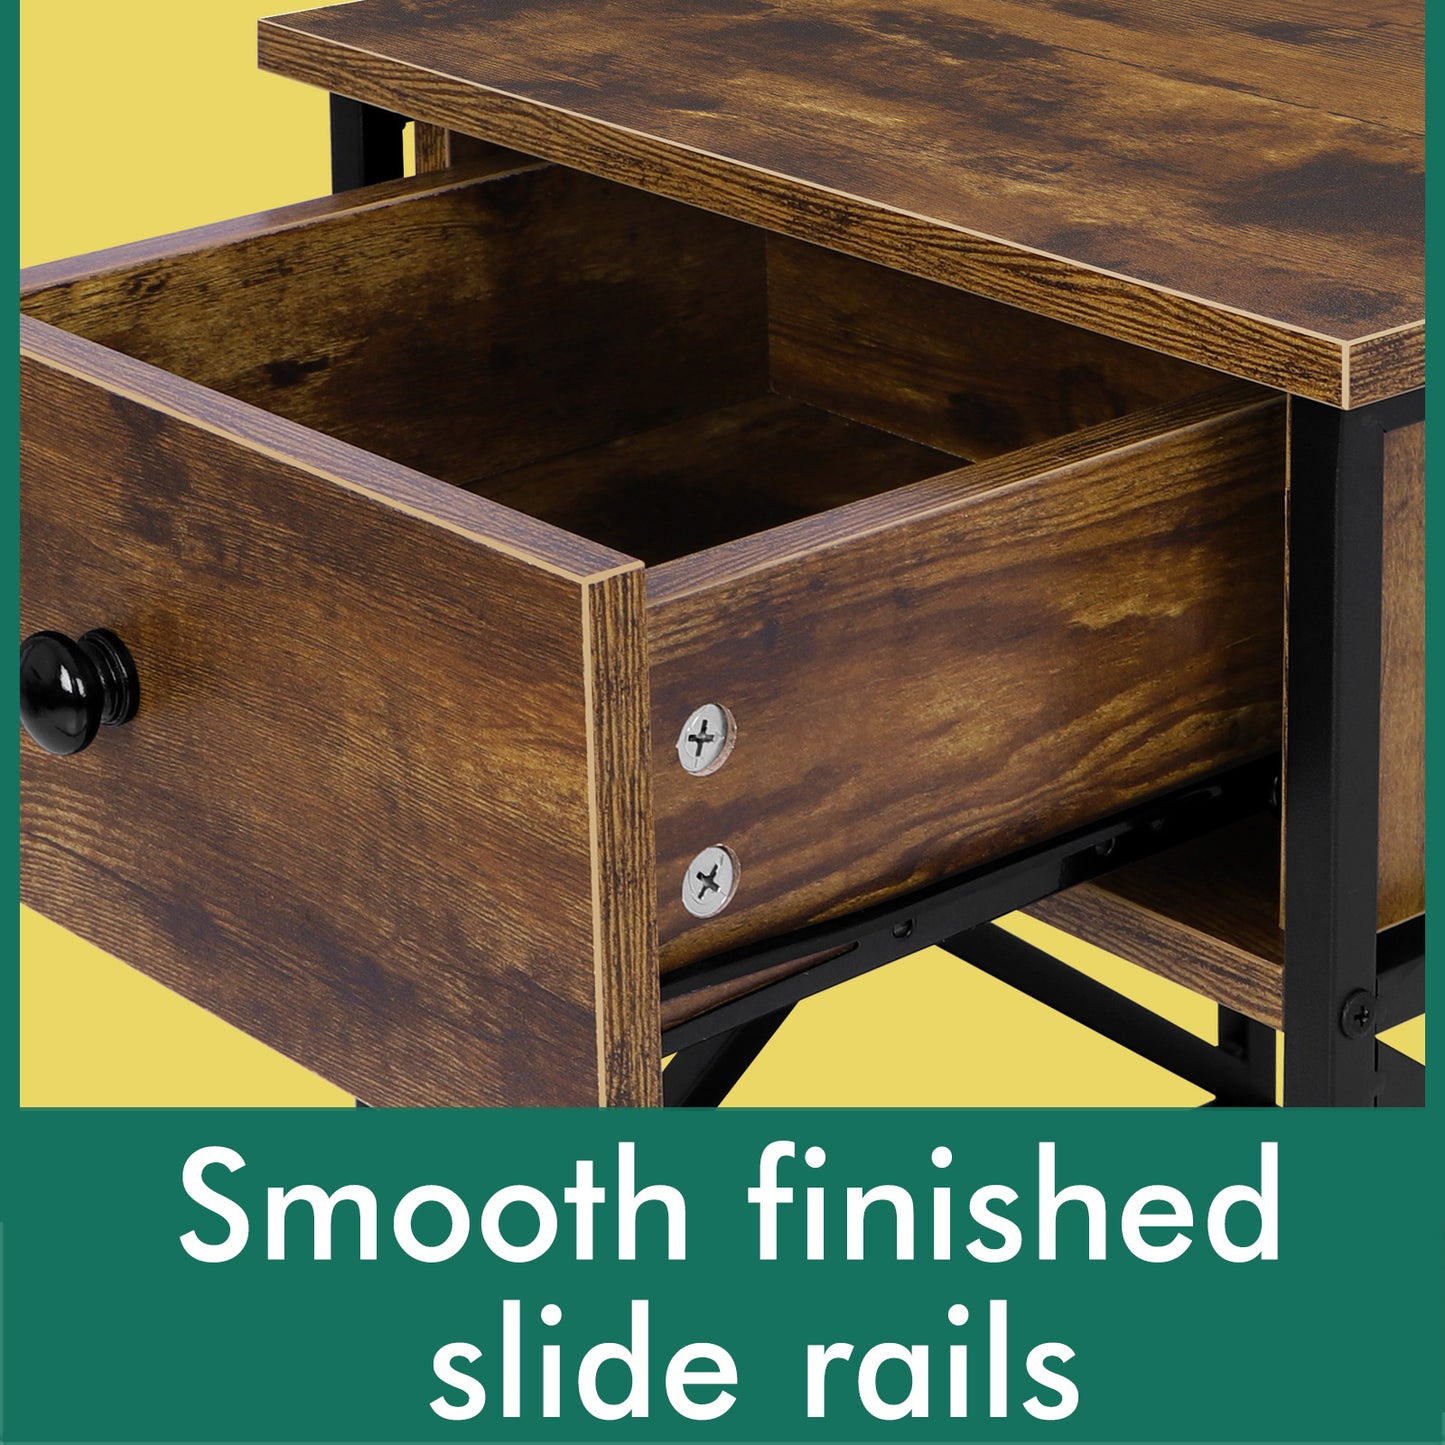 ELFORDSON Bedside Table Retro Wooden Nightstand Storage Side Cabinet, Rustic Brown